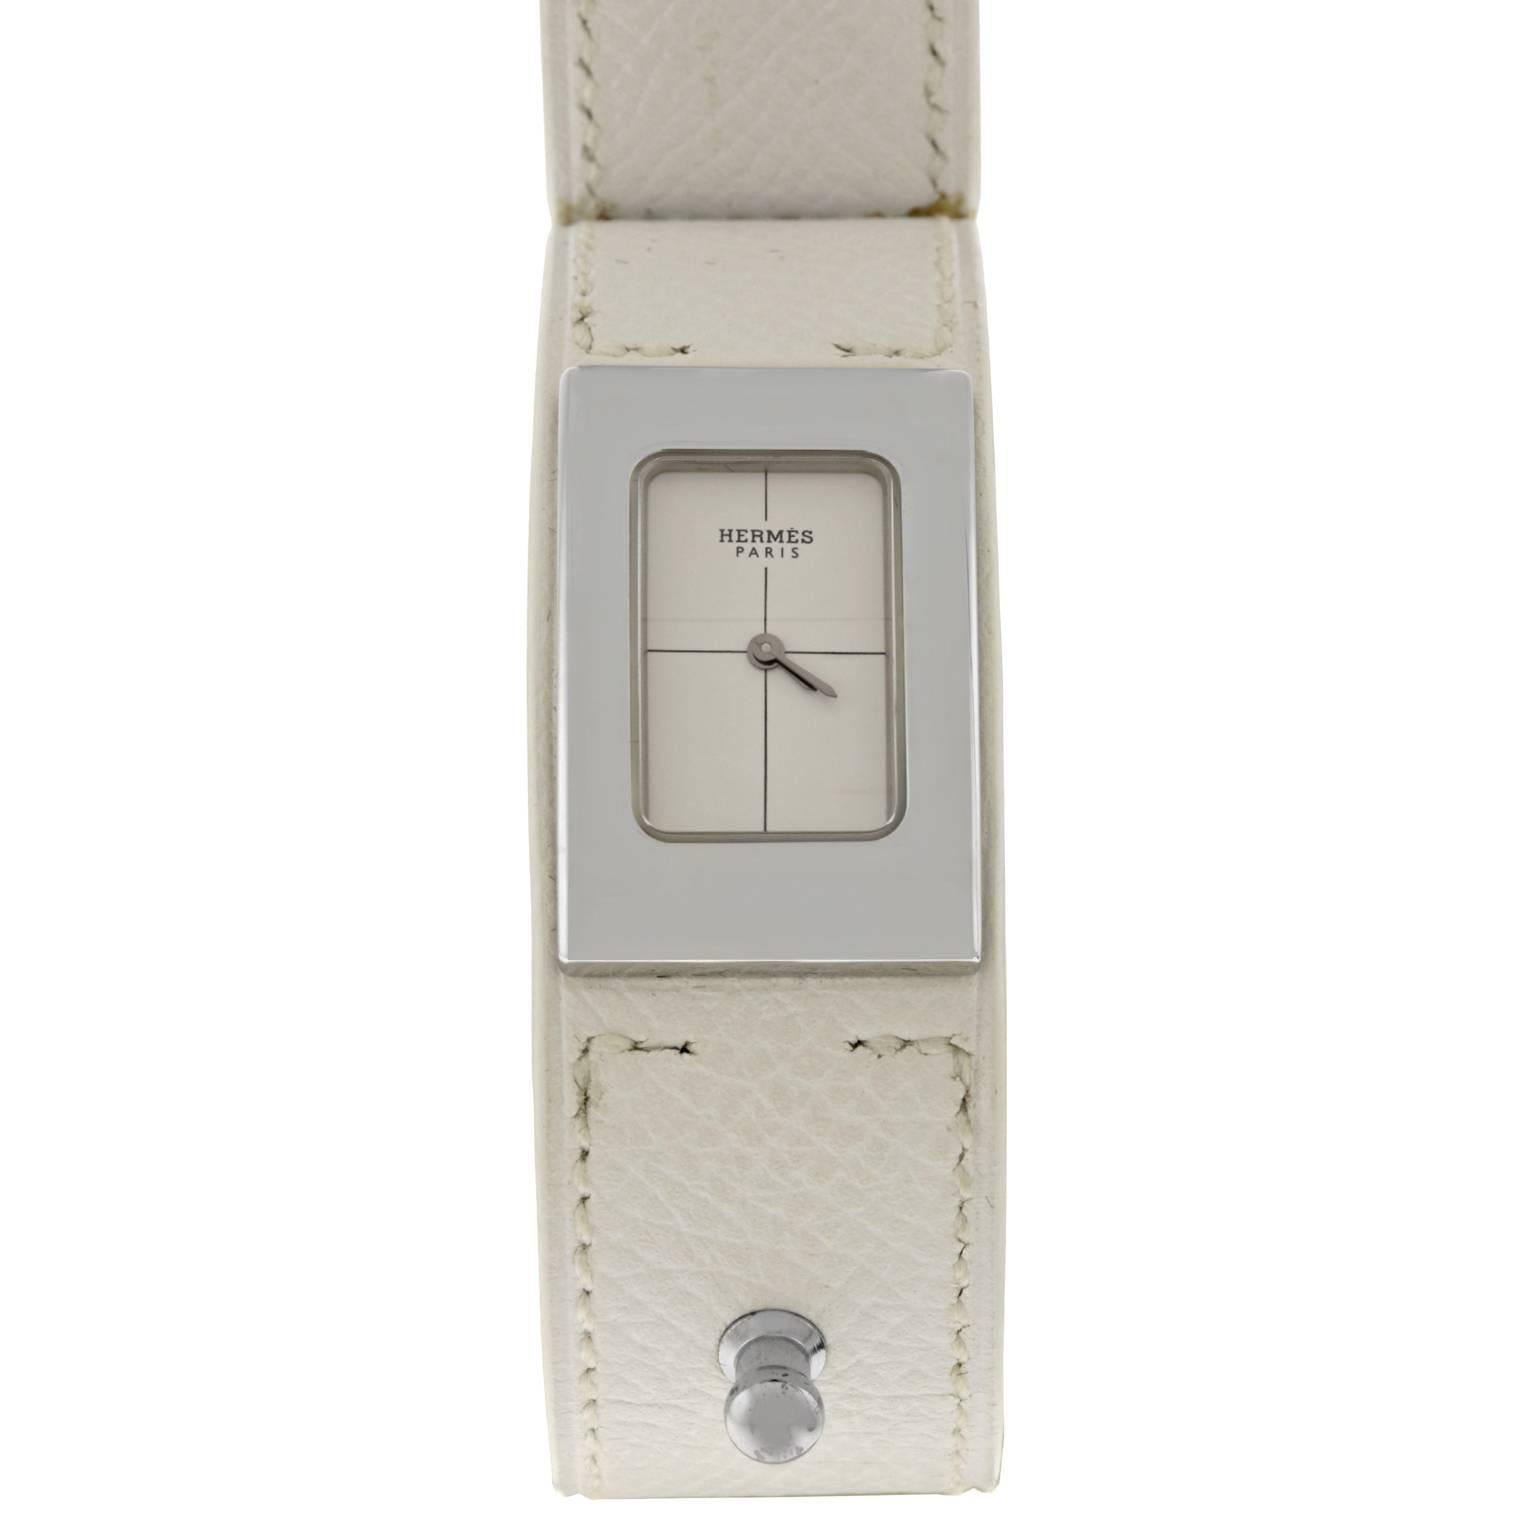  Hermès White Leather Hidden Bracelet Watch